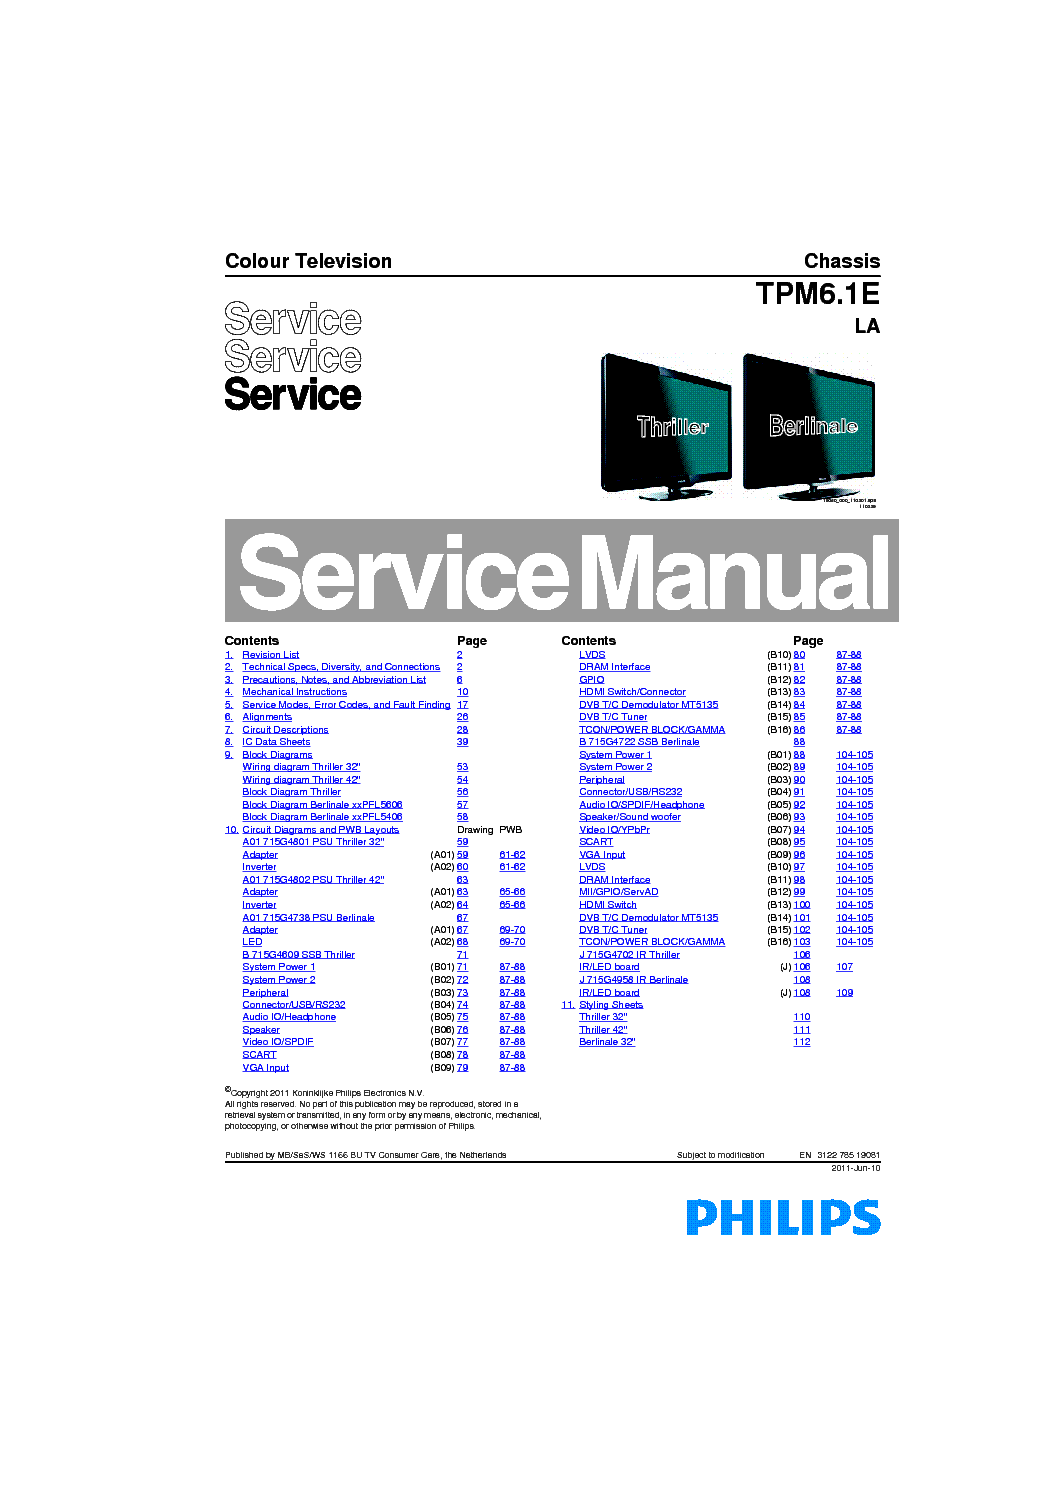 PHILIPS CHASSIS TPM6.1E LA service manual (1st page)